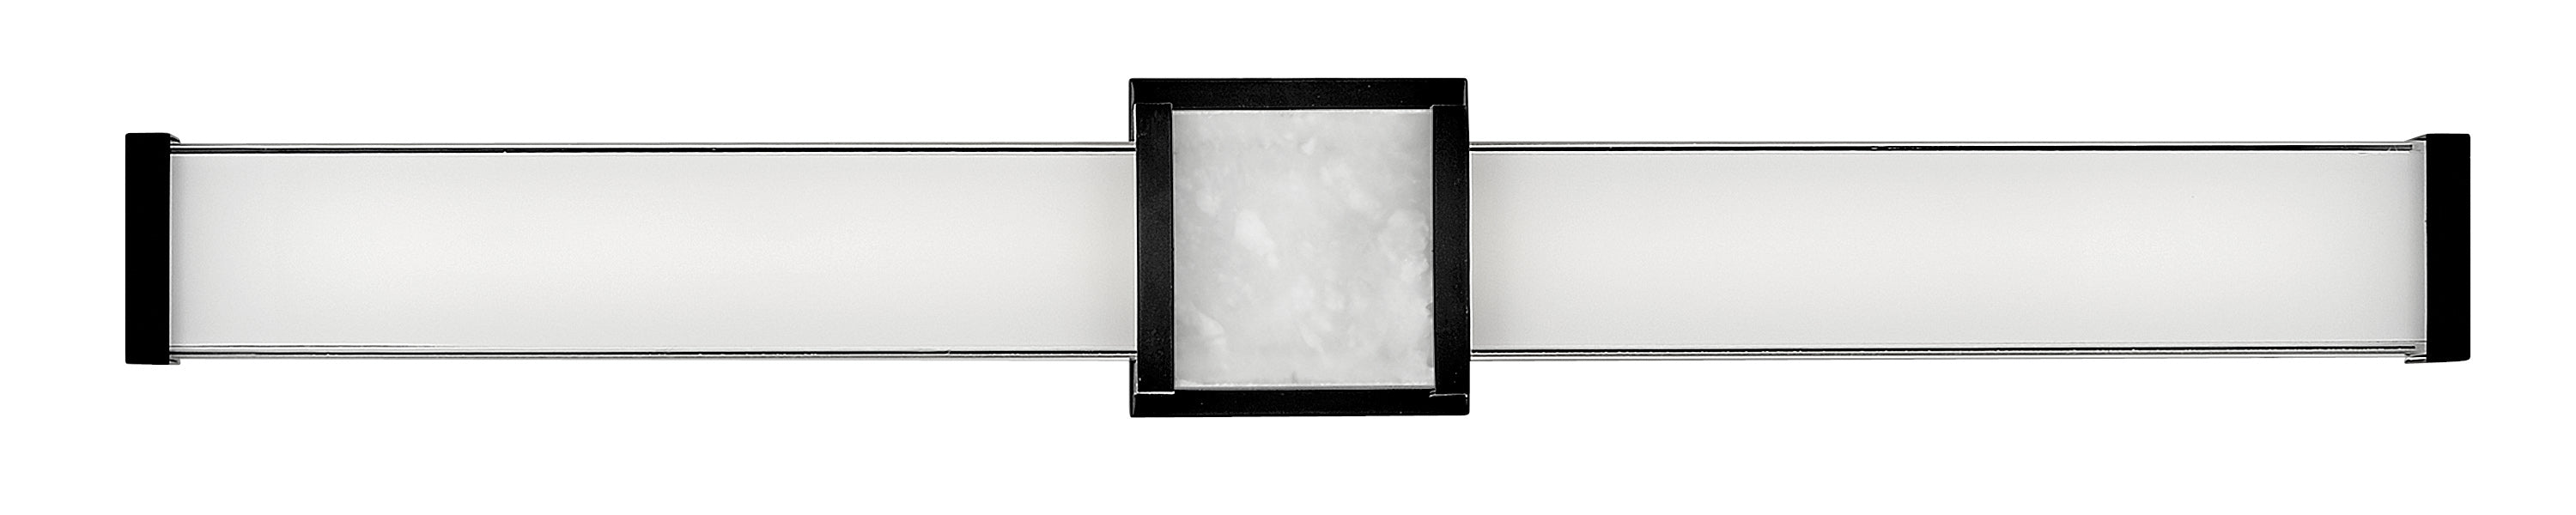 PIETRA Bathroom sconce Black INTEGRATED LED - 51583BK | HINKLEY